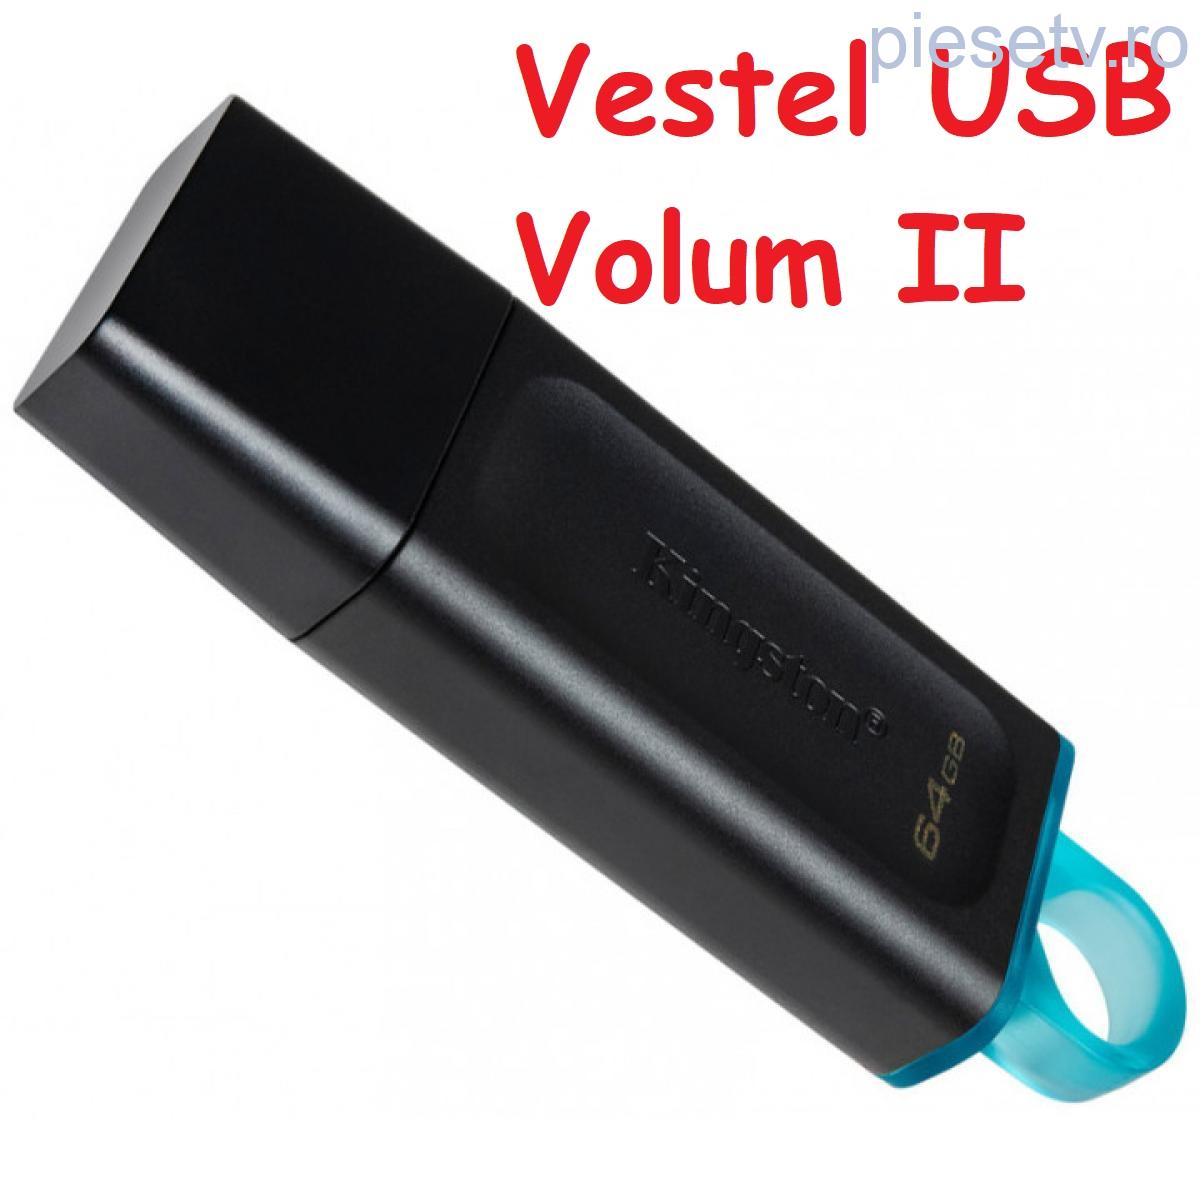 Stick USB NOU de 64Gb cu Softuri Vestel - Volum II